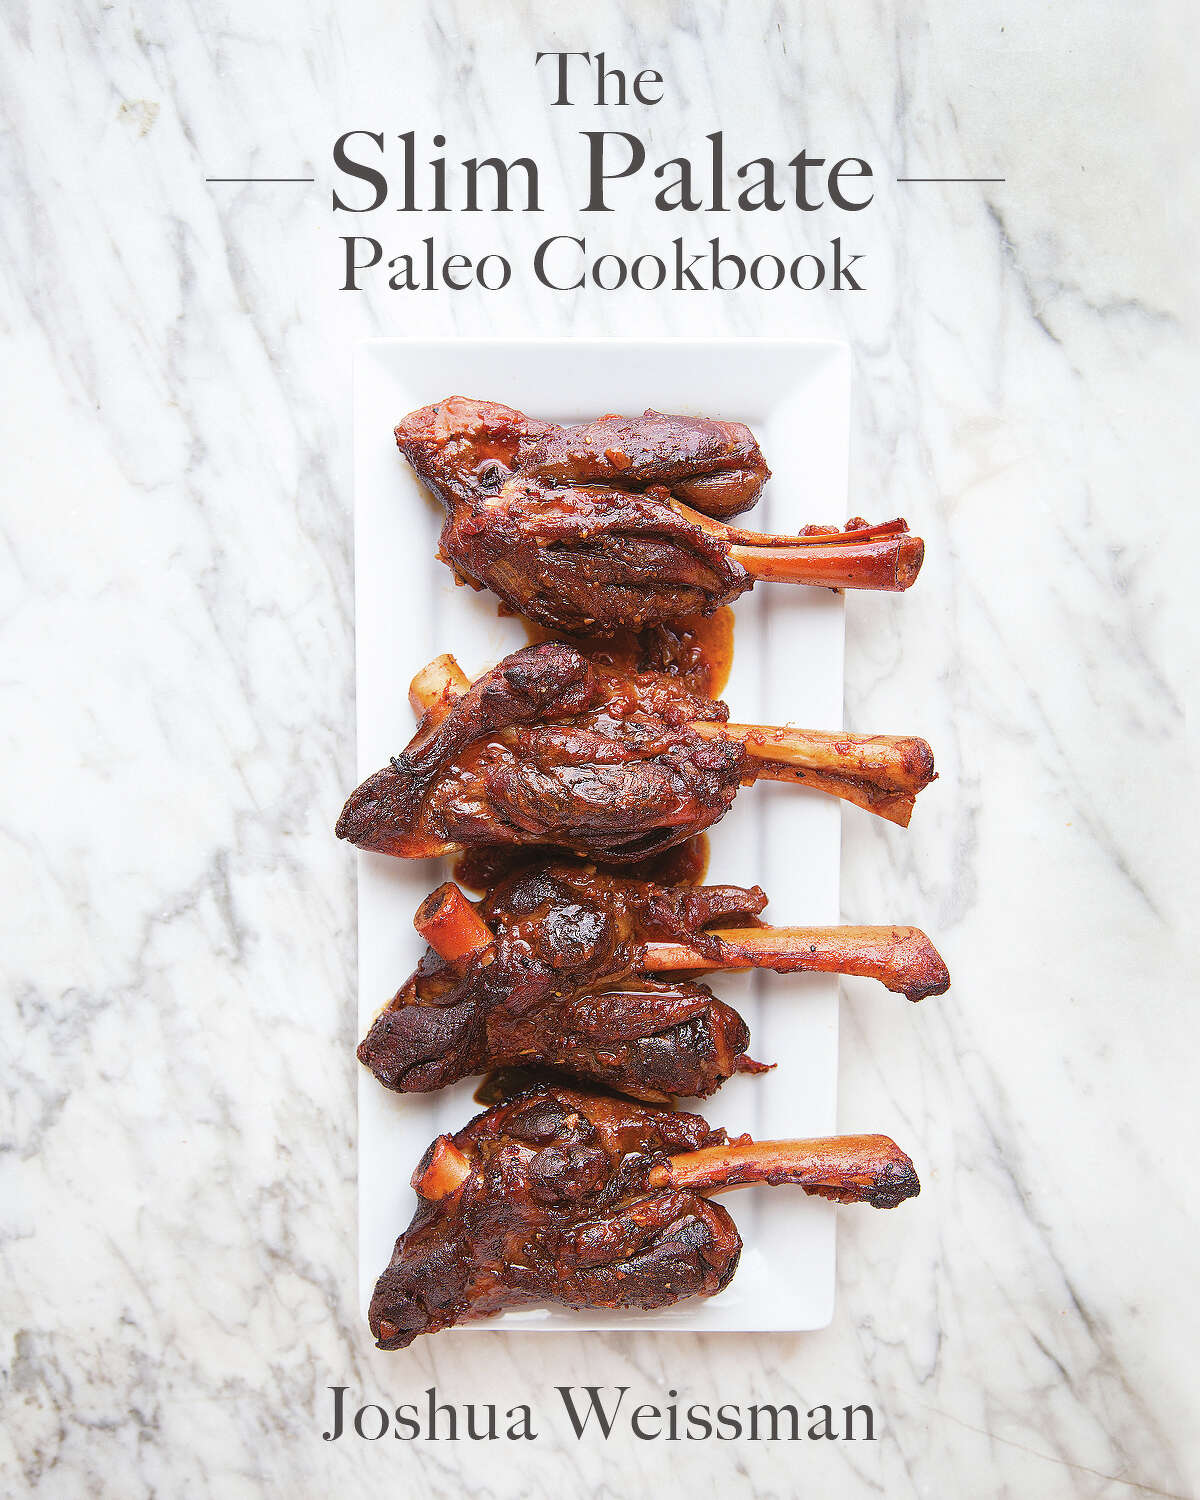 "The Slim Palate Paleo Cookbook," by Joshua Weissman.